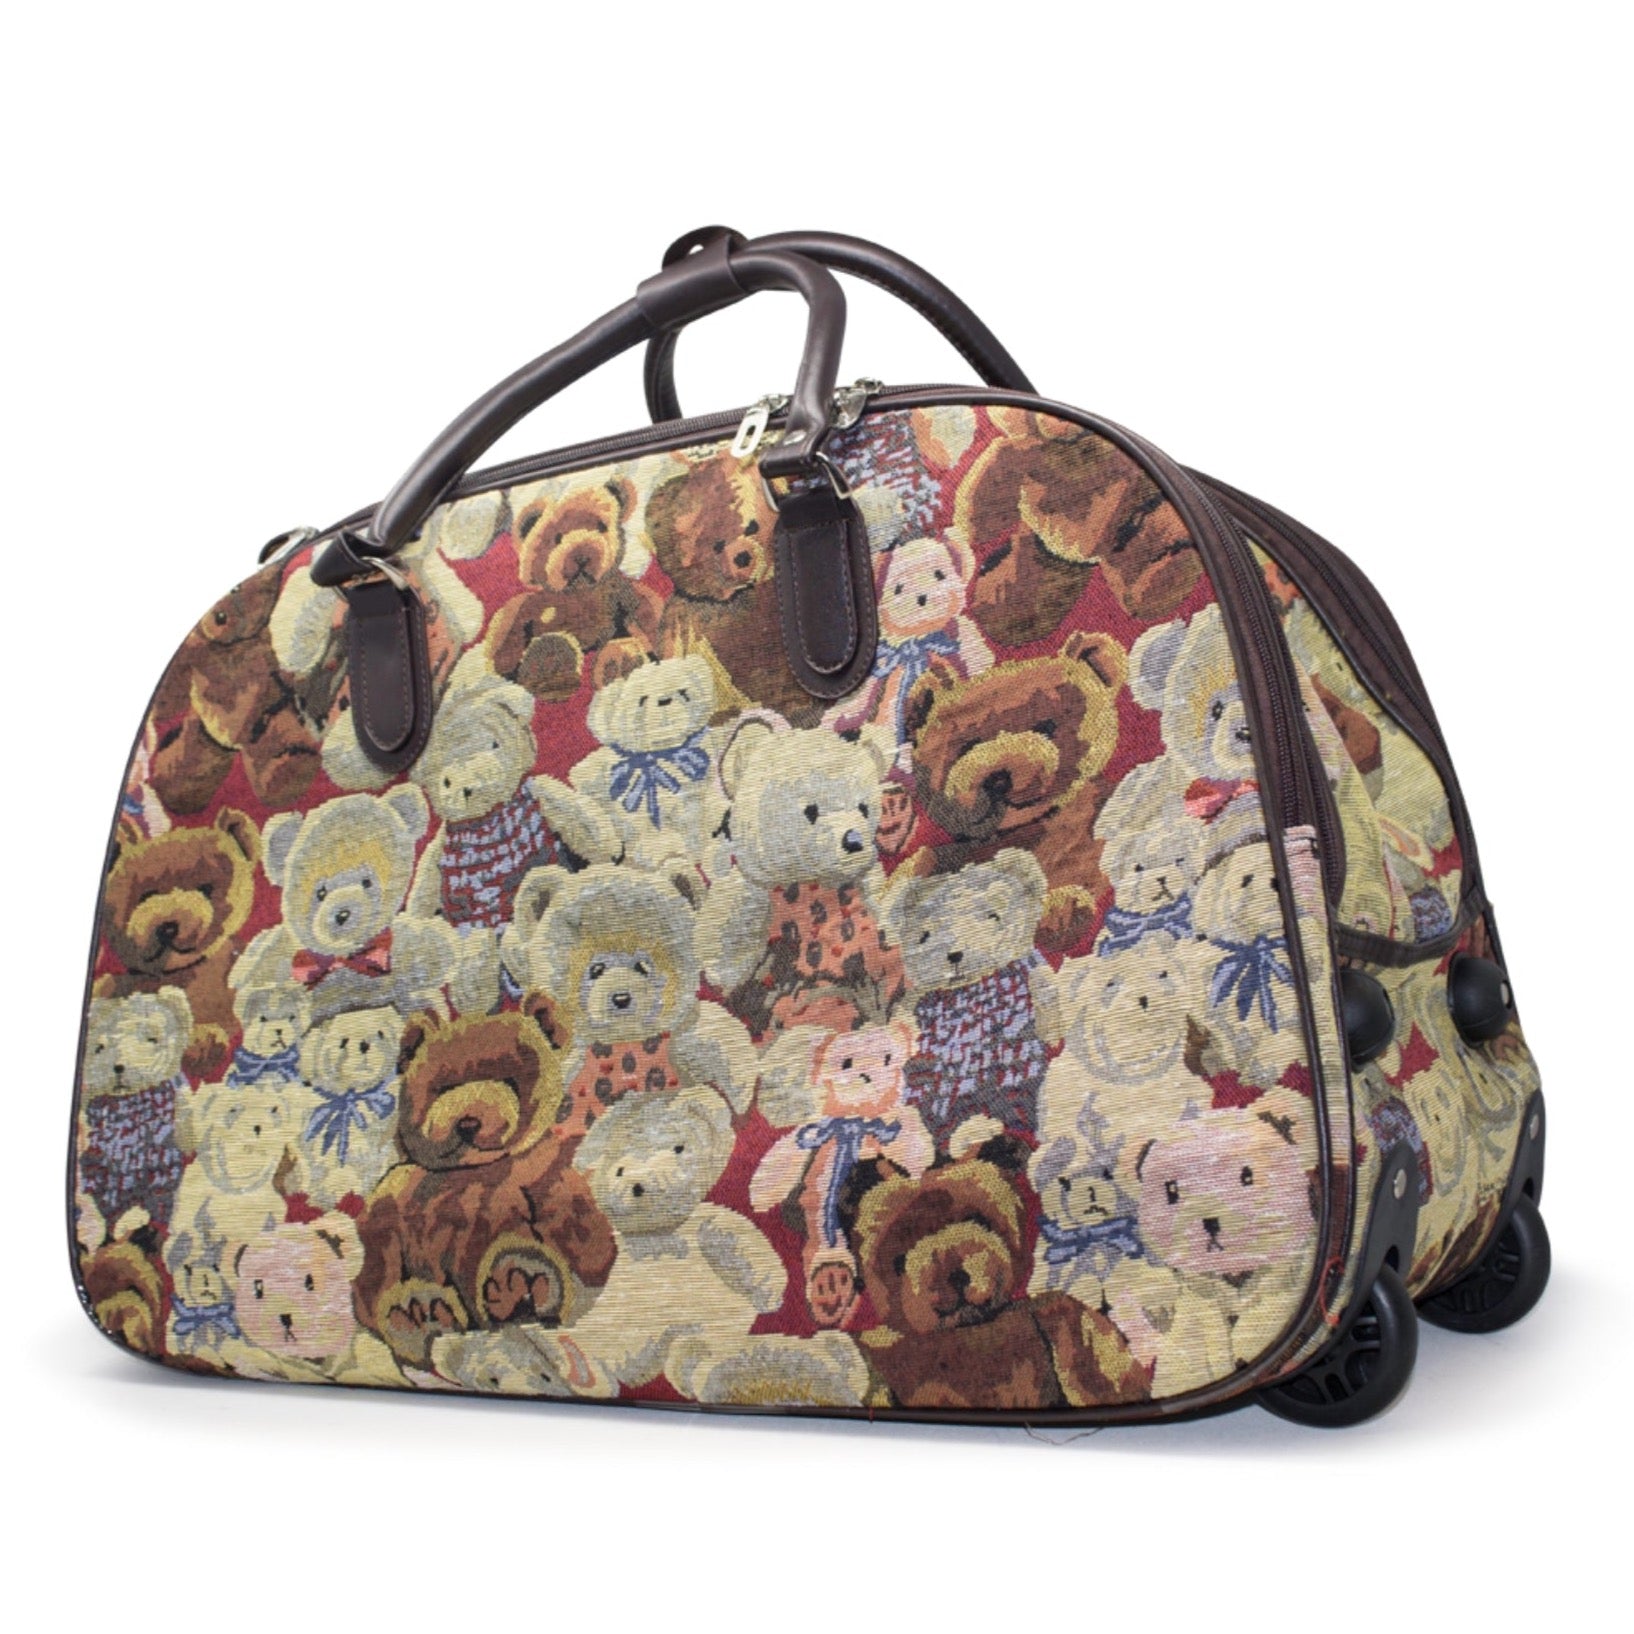 Tapestry Trolley/Luggage Bag - Teddy Bears